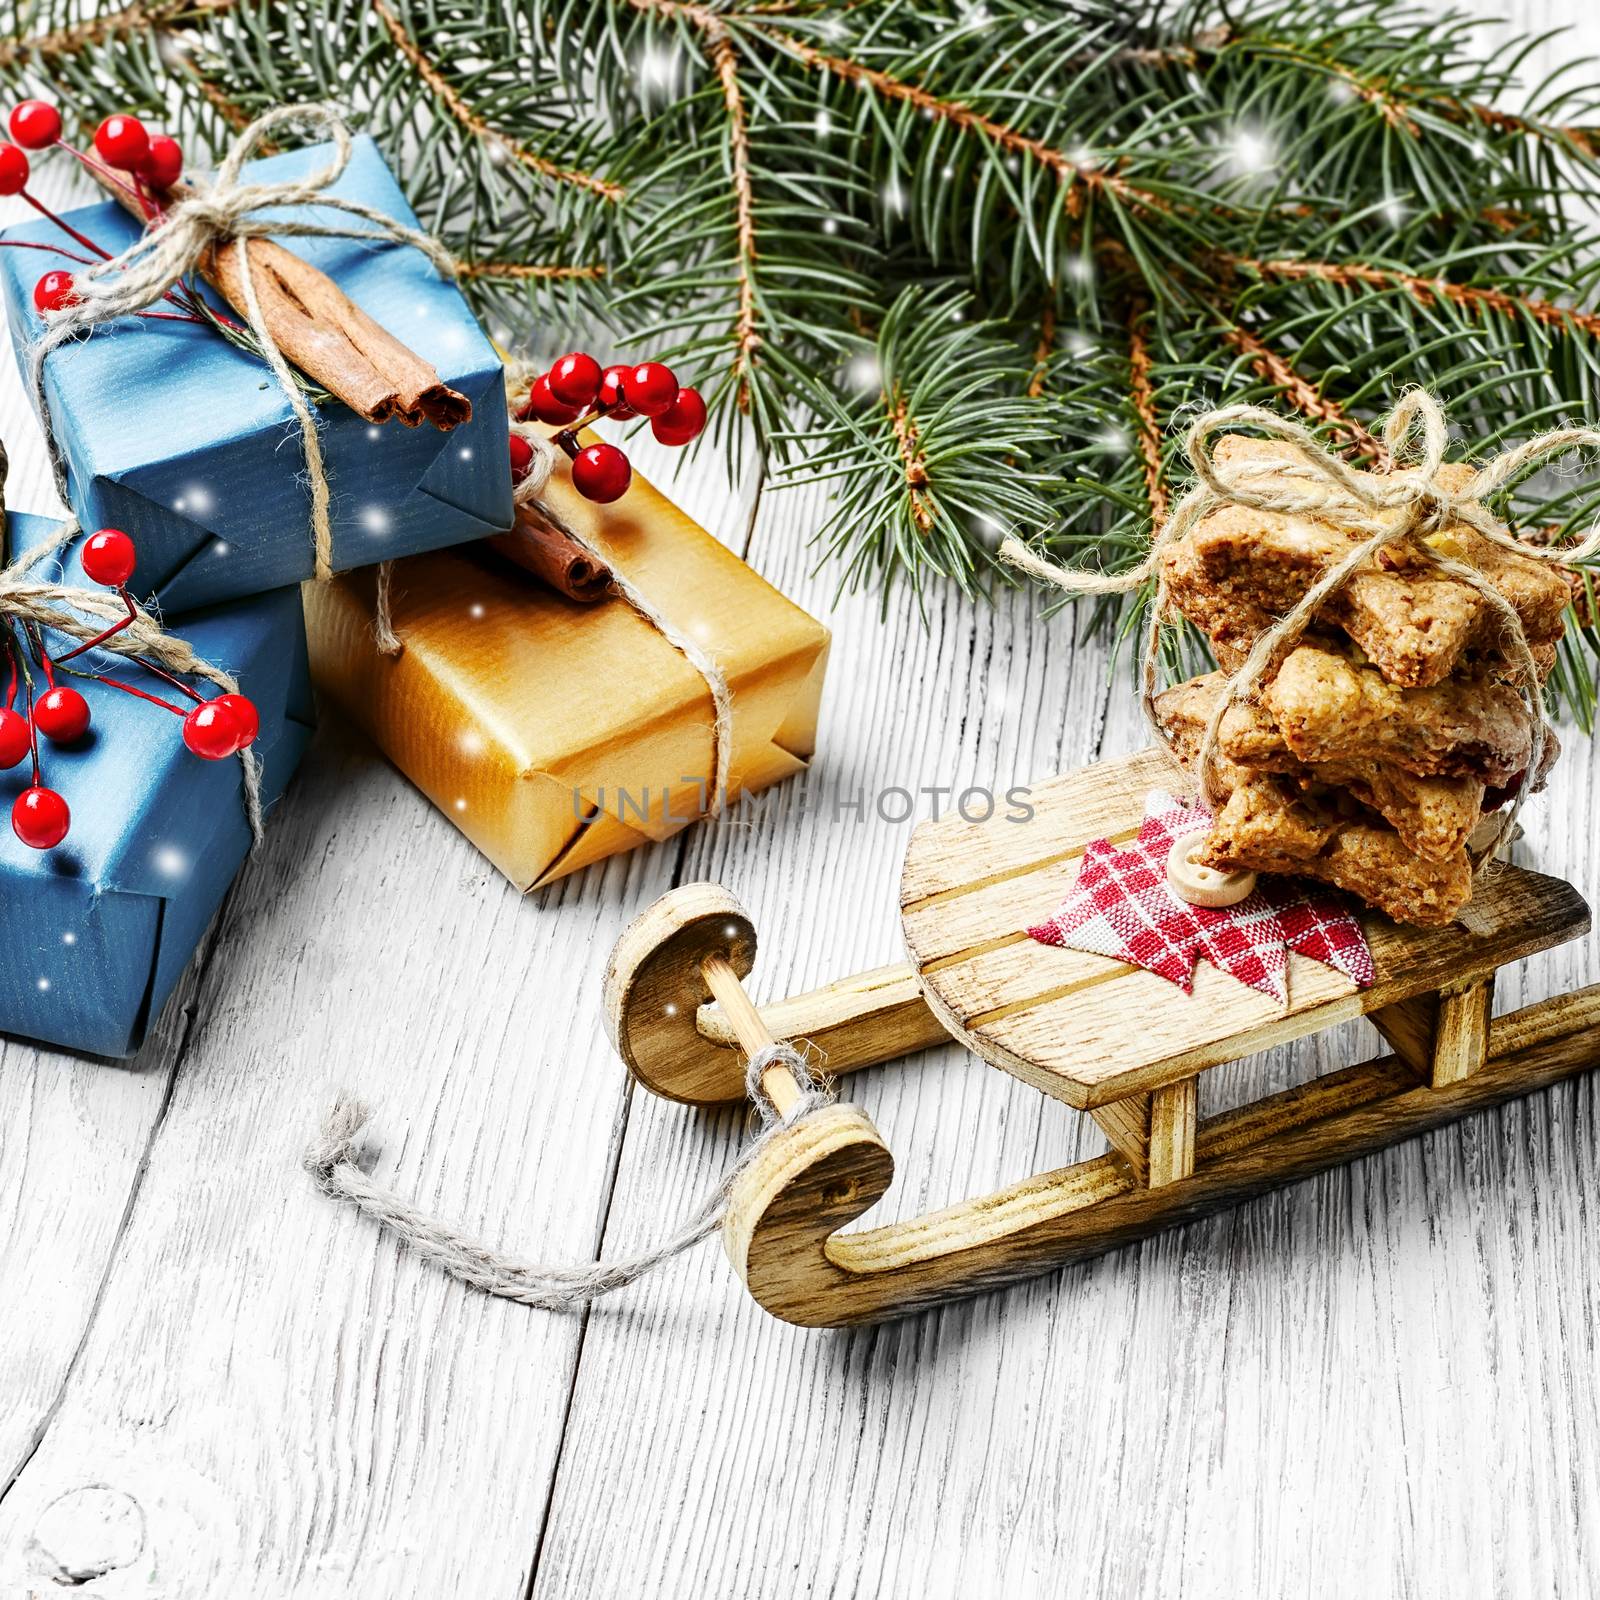 Santa's sleigh and gift. Christmas card by LMykola